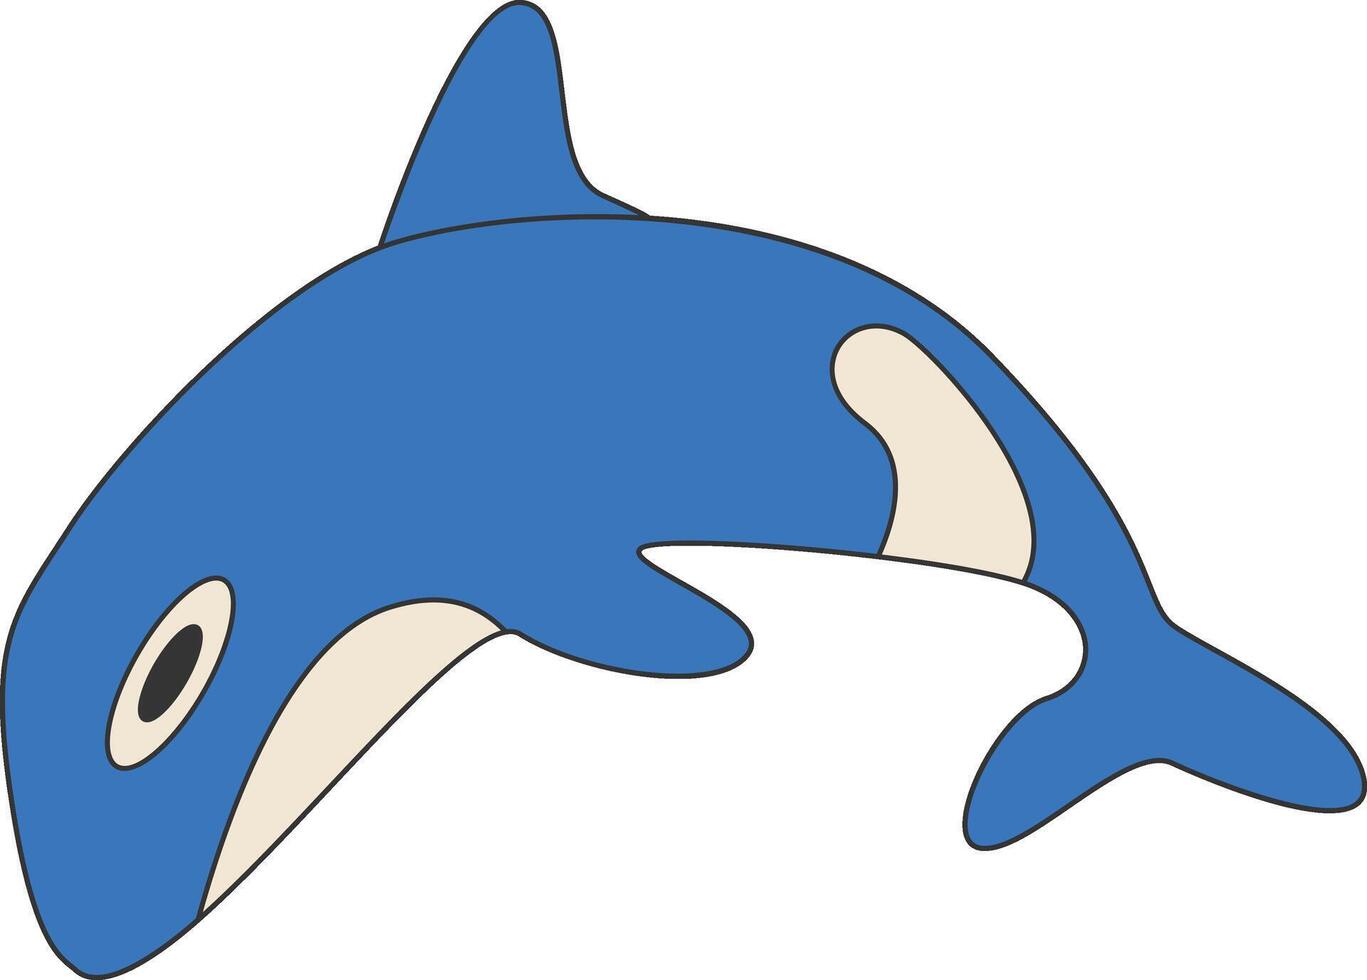 Marine Life Icon with Flat Cartoon Design. Ocean Animals on White Background vector